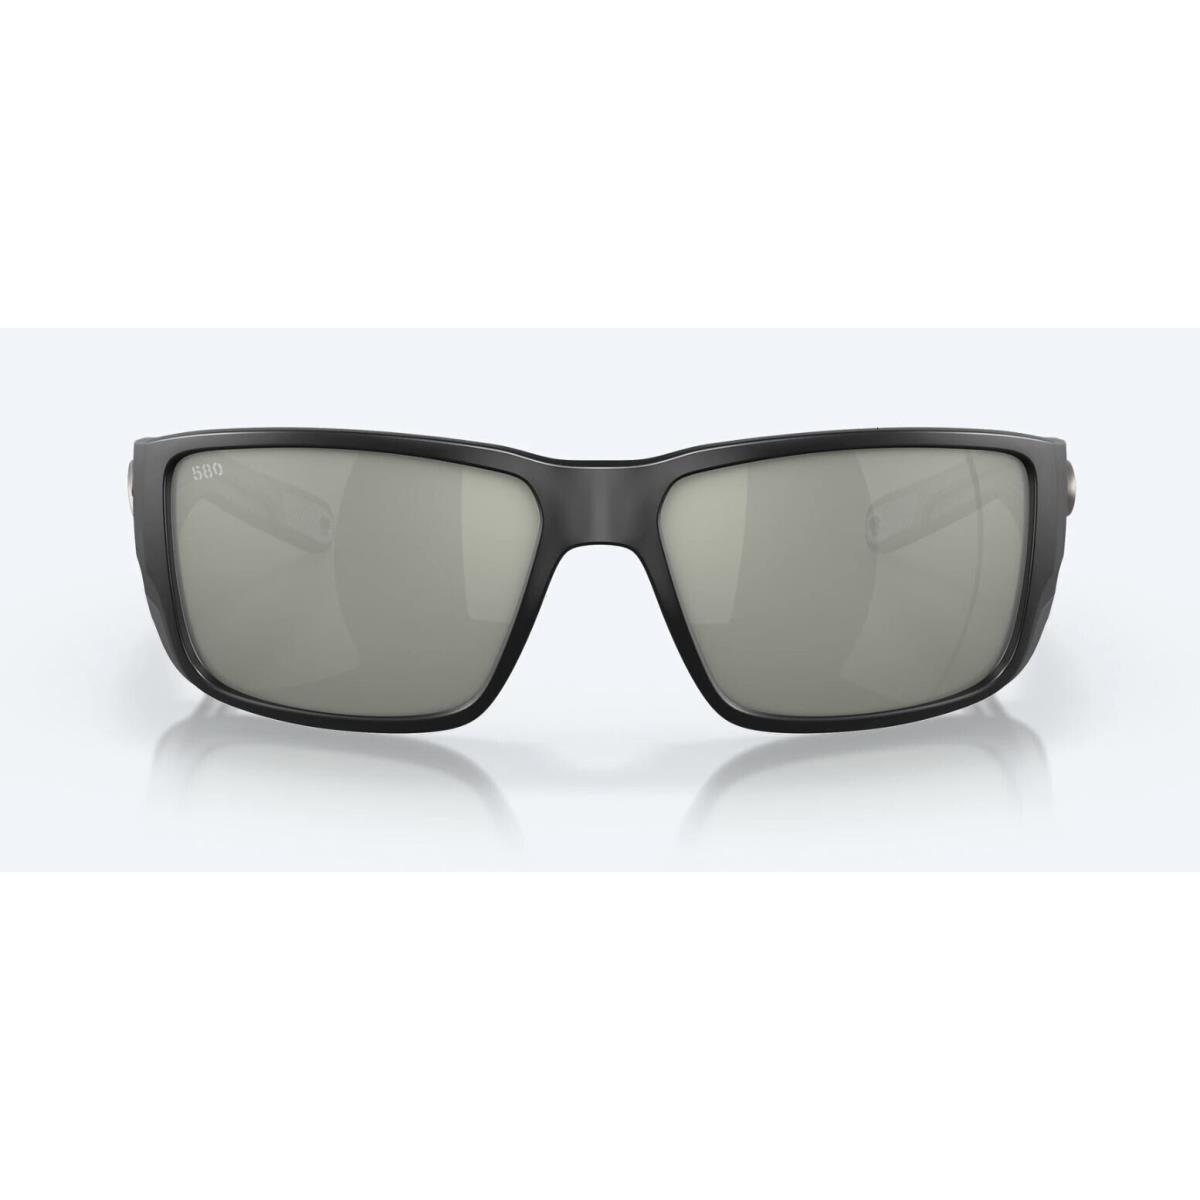 Costa Del Mar sunglasses  - Black Frame, Gray Silver Lens 0